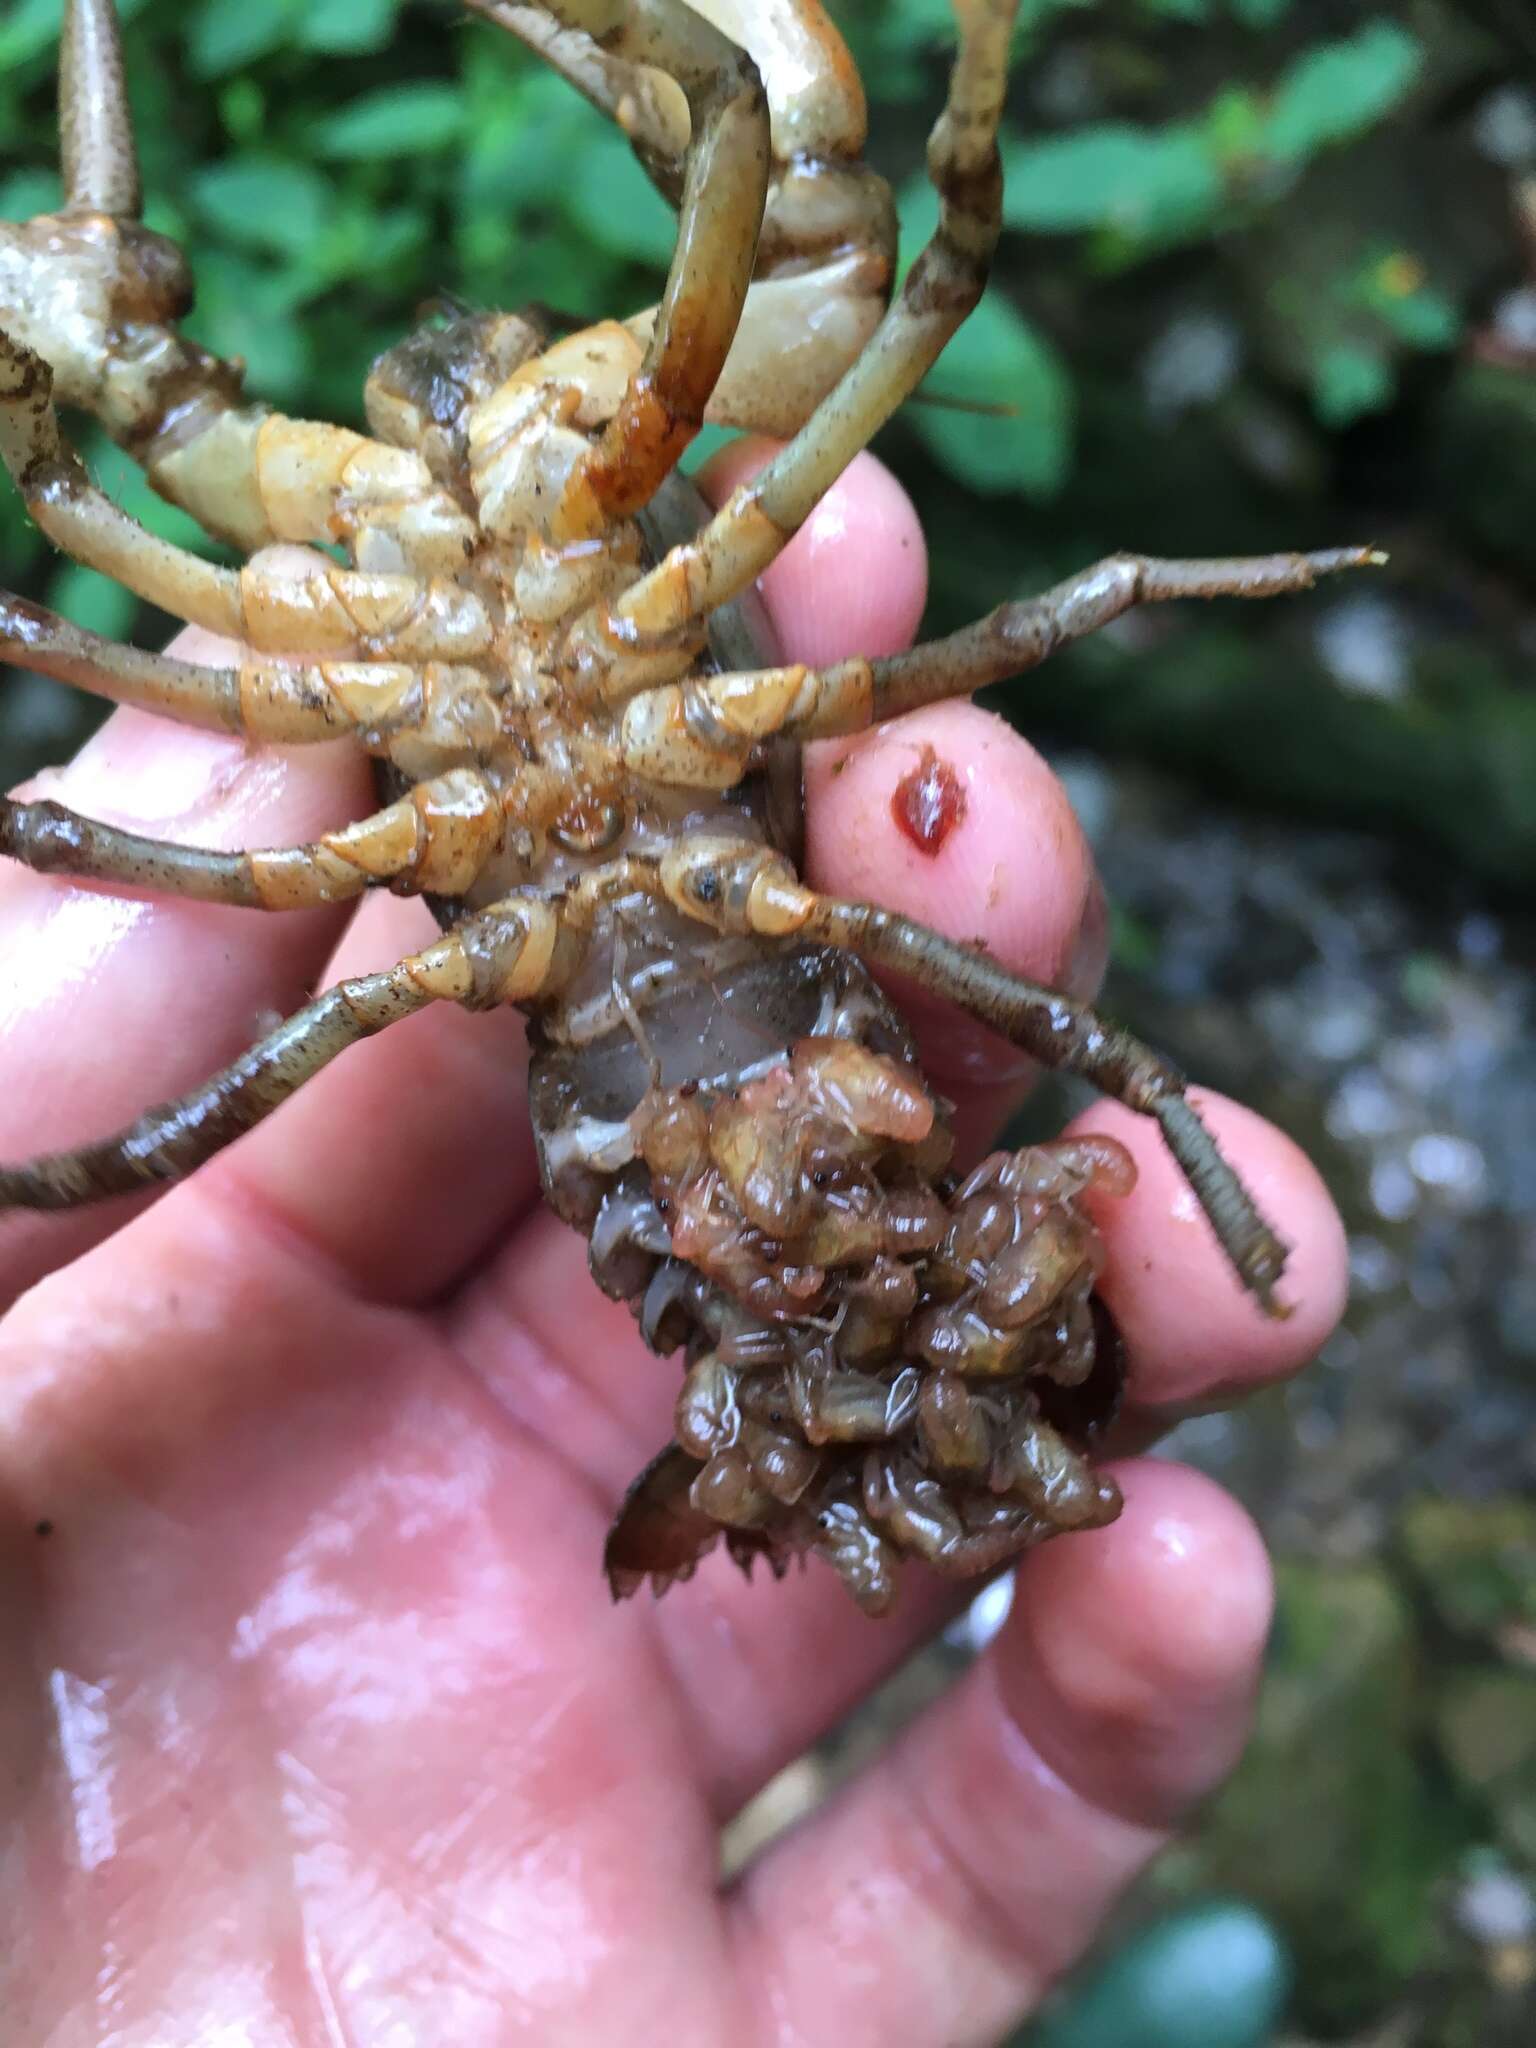 Image of Rock Crayfish